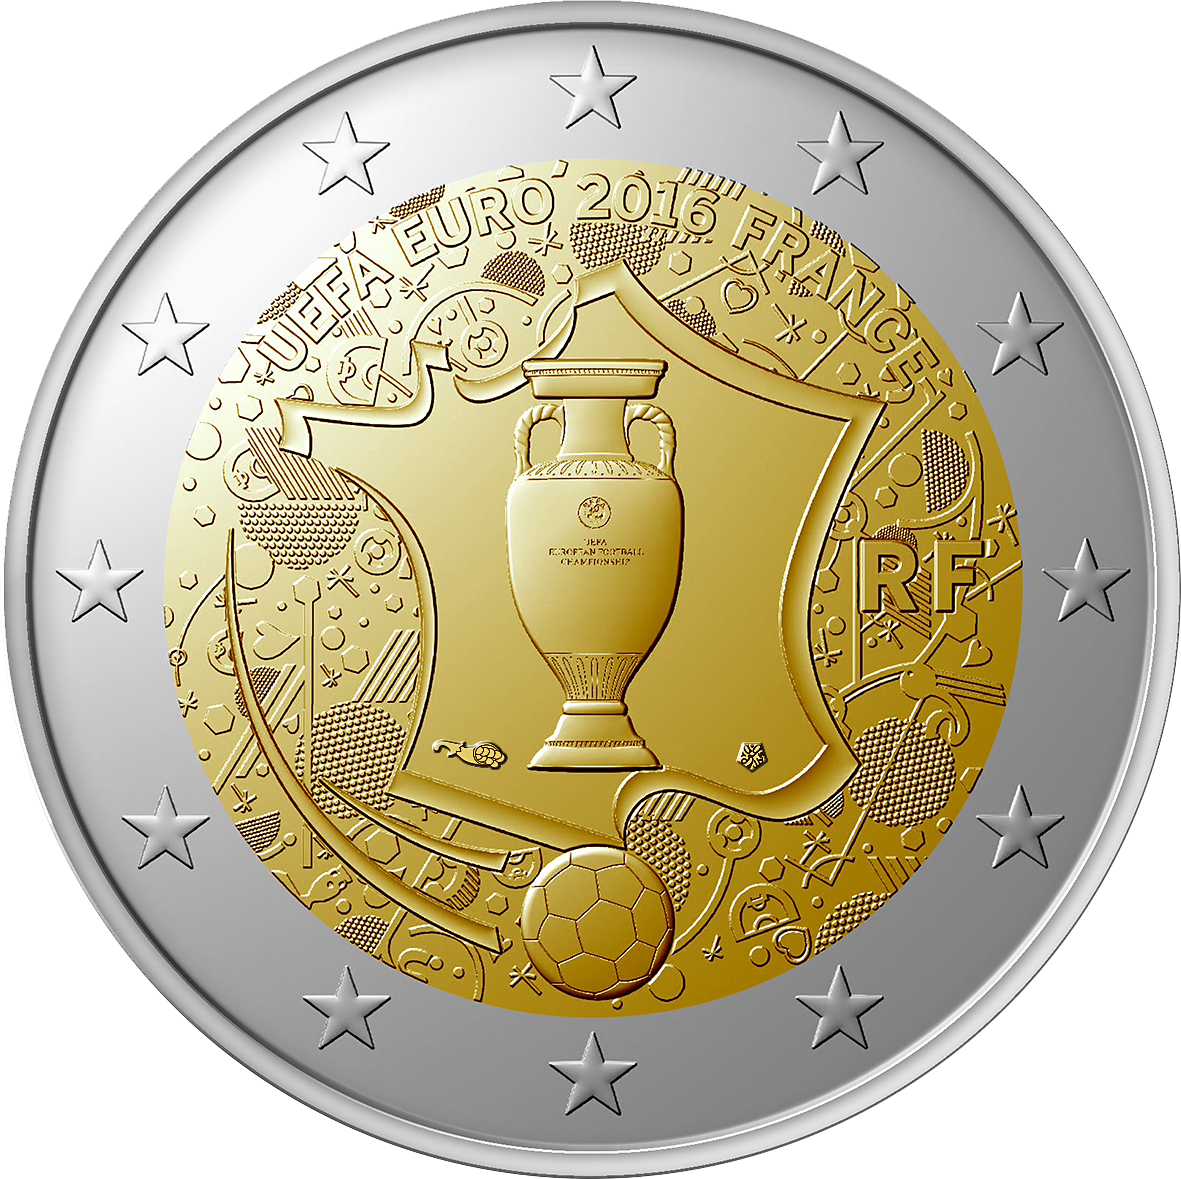 Monnaie Francaise 2 Euros Uefa Societe Francaise Des Monnaies